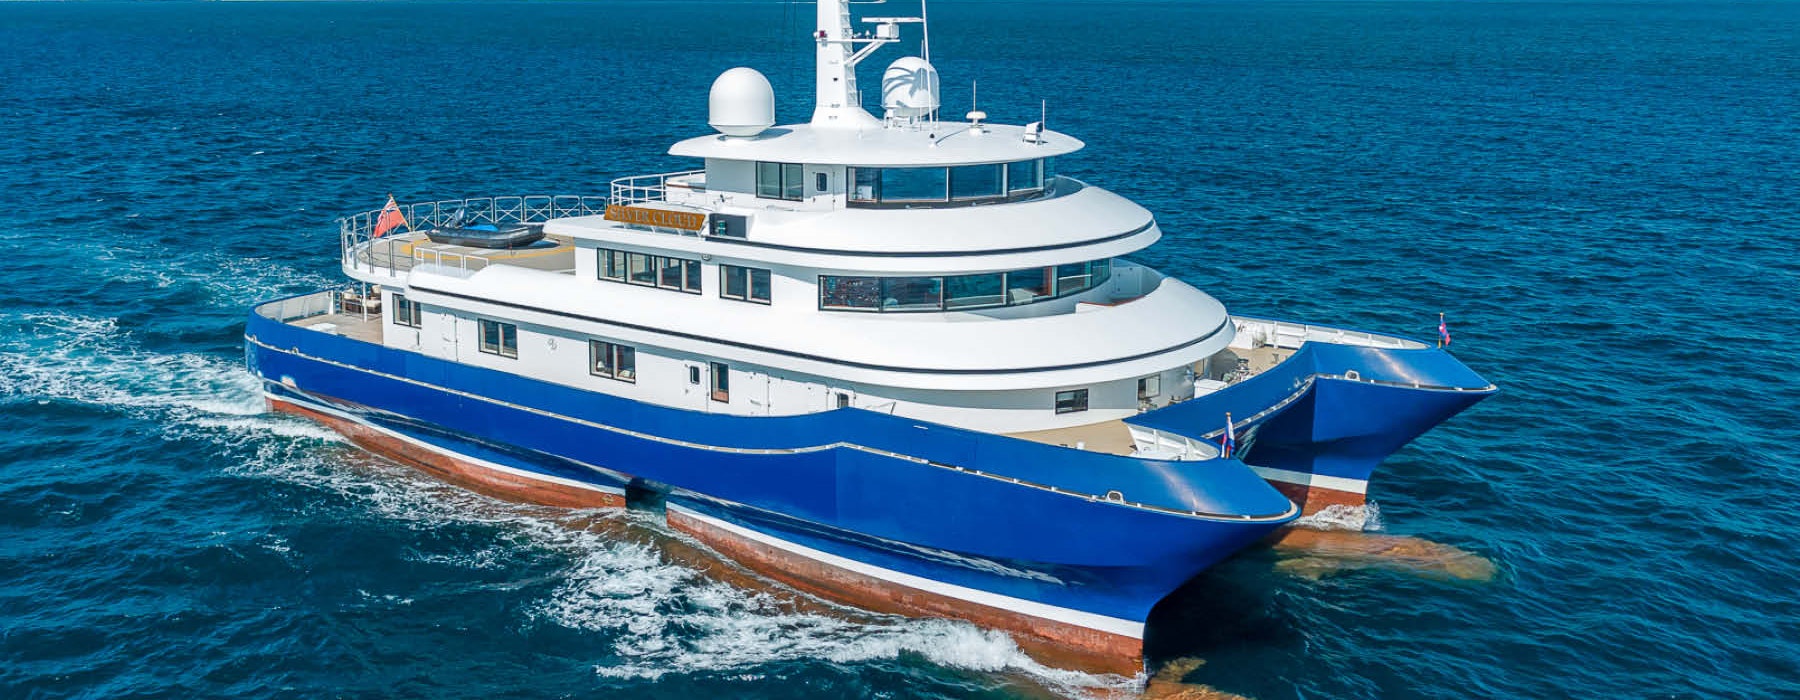 Luxury yacht for sale Abeking & Rasmussen SILVER CLOUD 41m Built 2008 Refit 2018